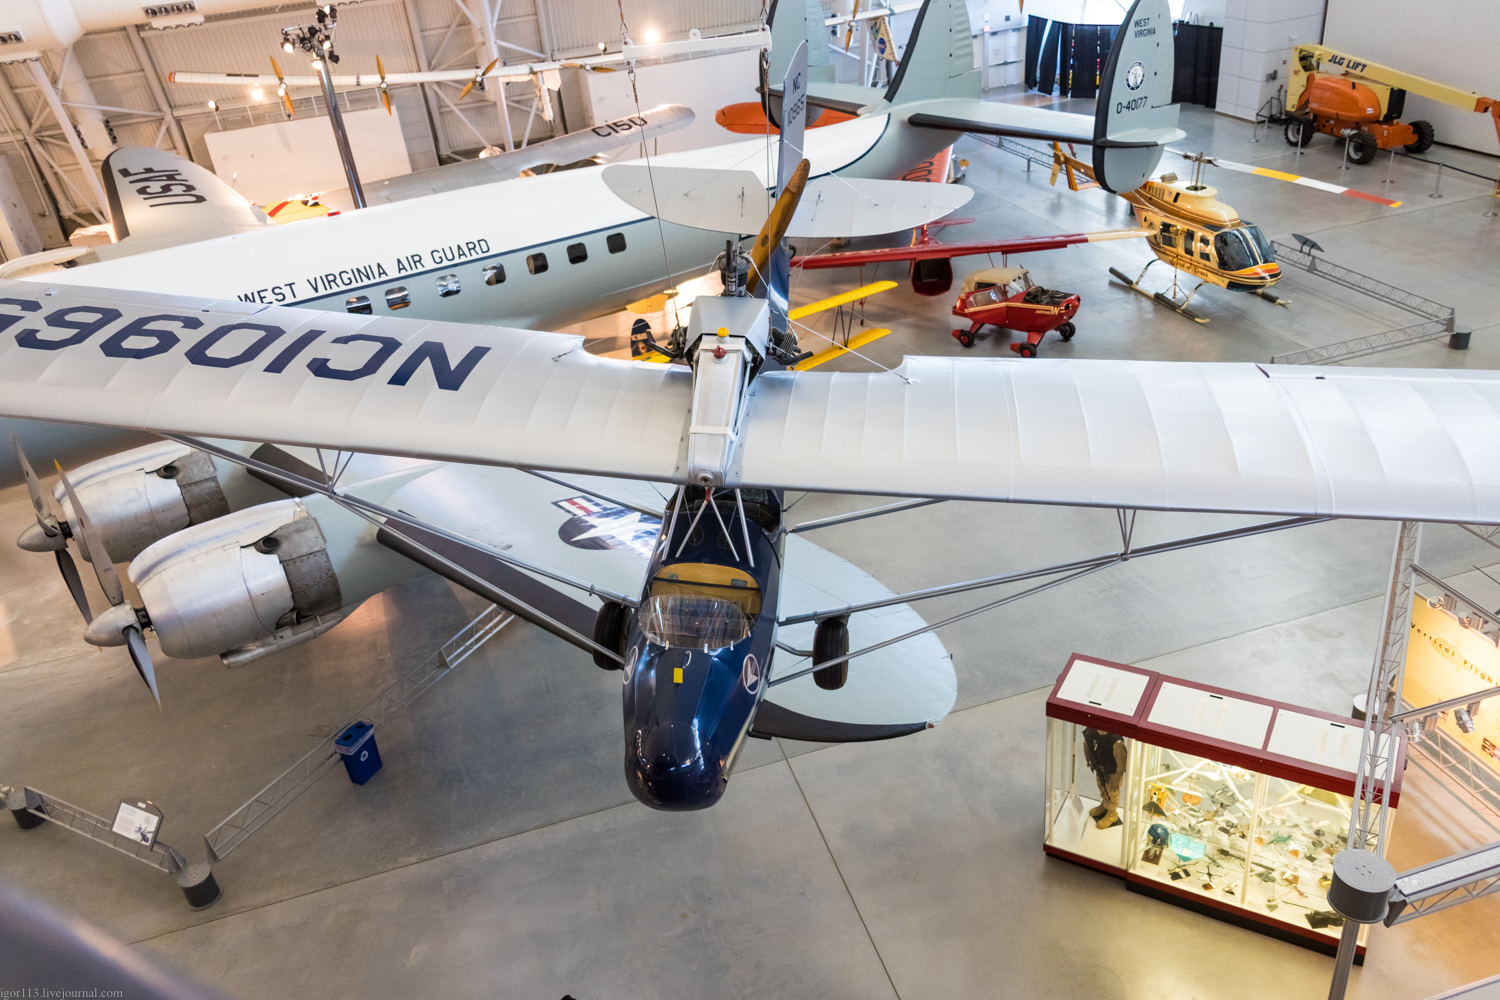  Steven f udvar-hazy center, 2018 год: легкий самолет Curtiss-Wright CW-1 